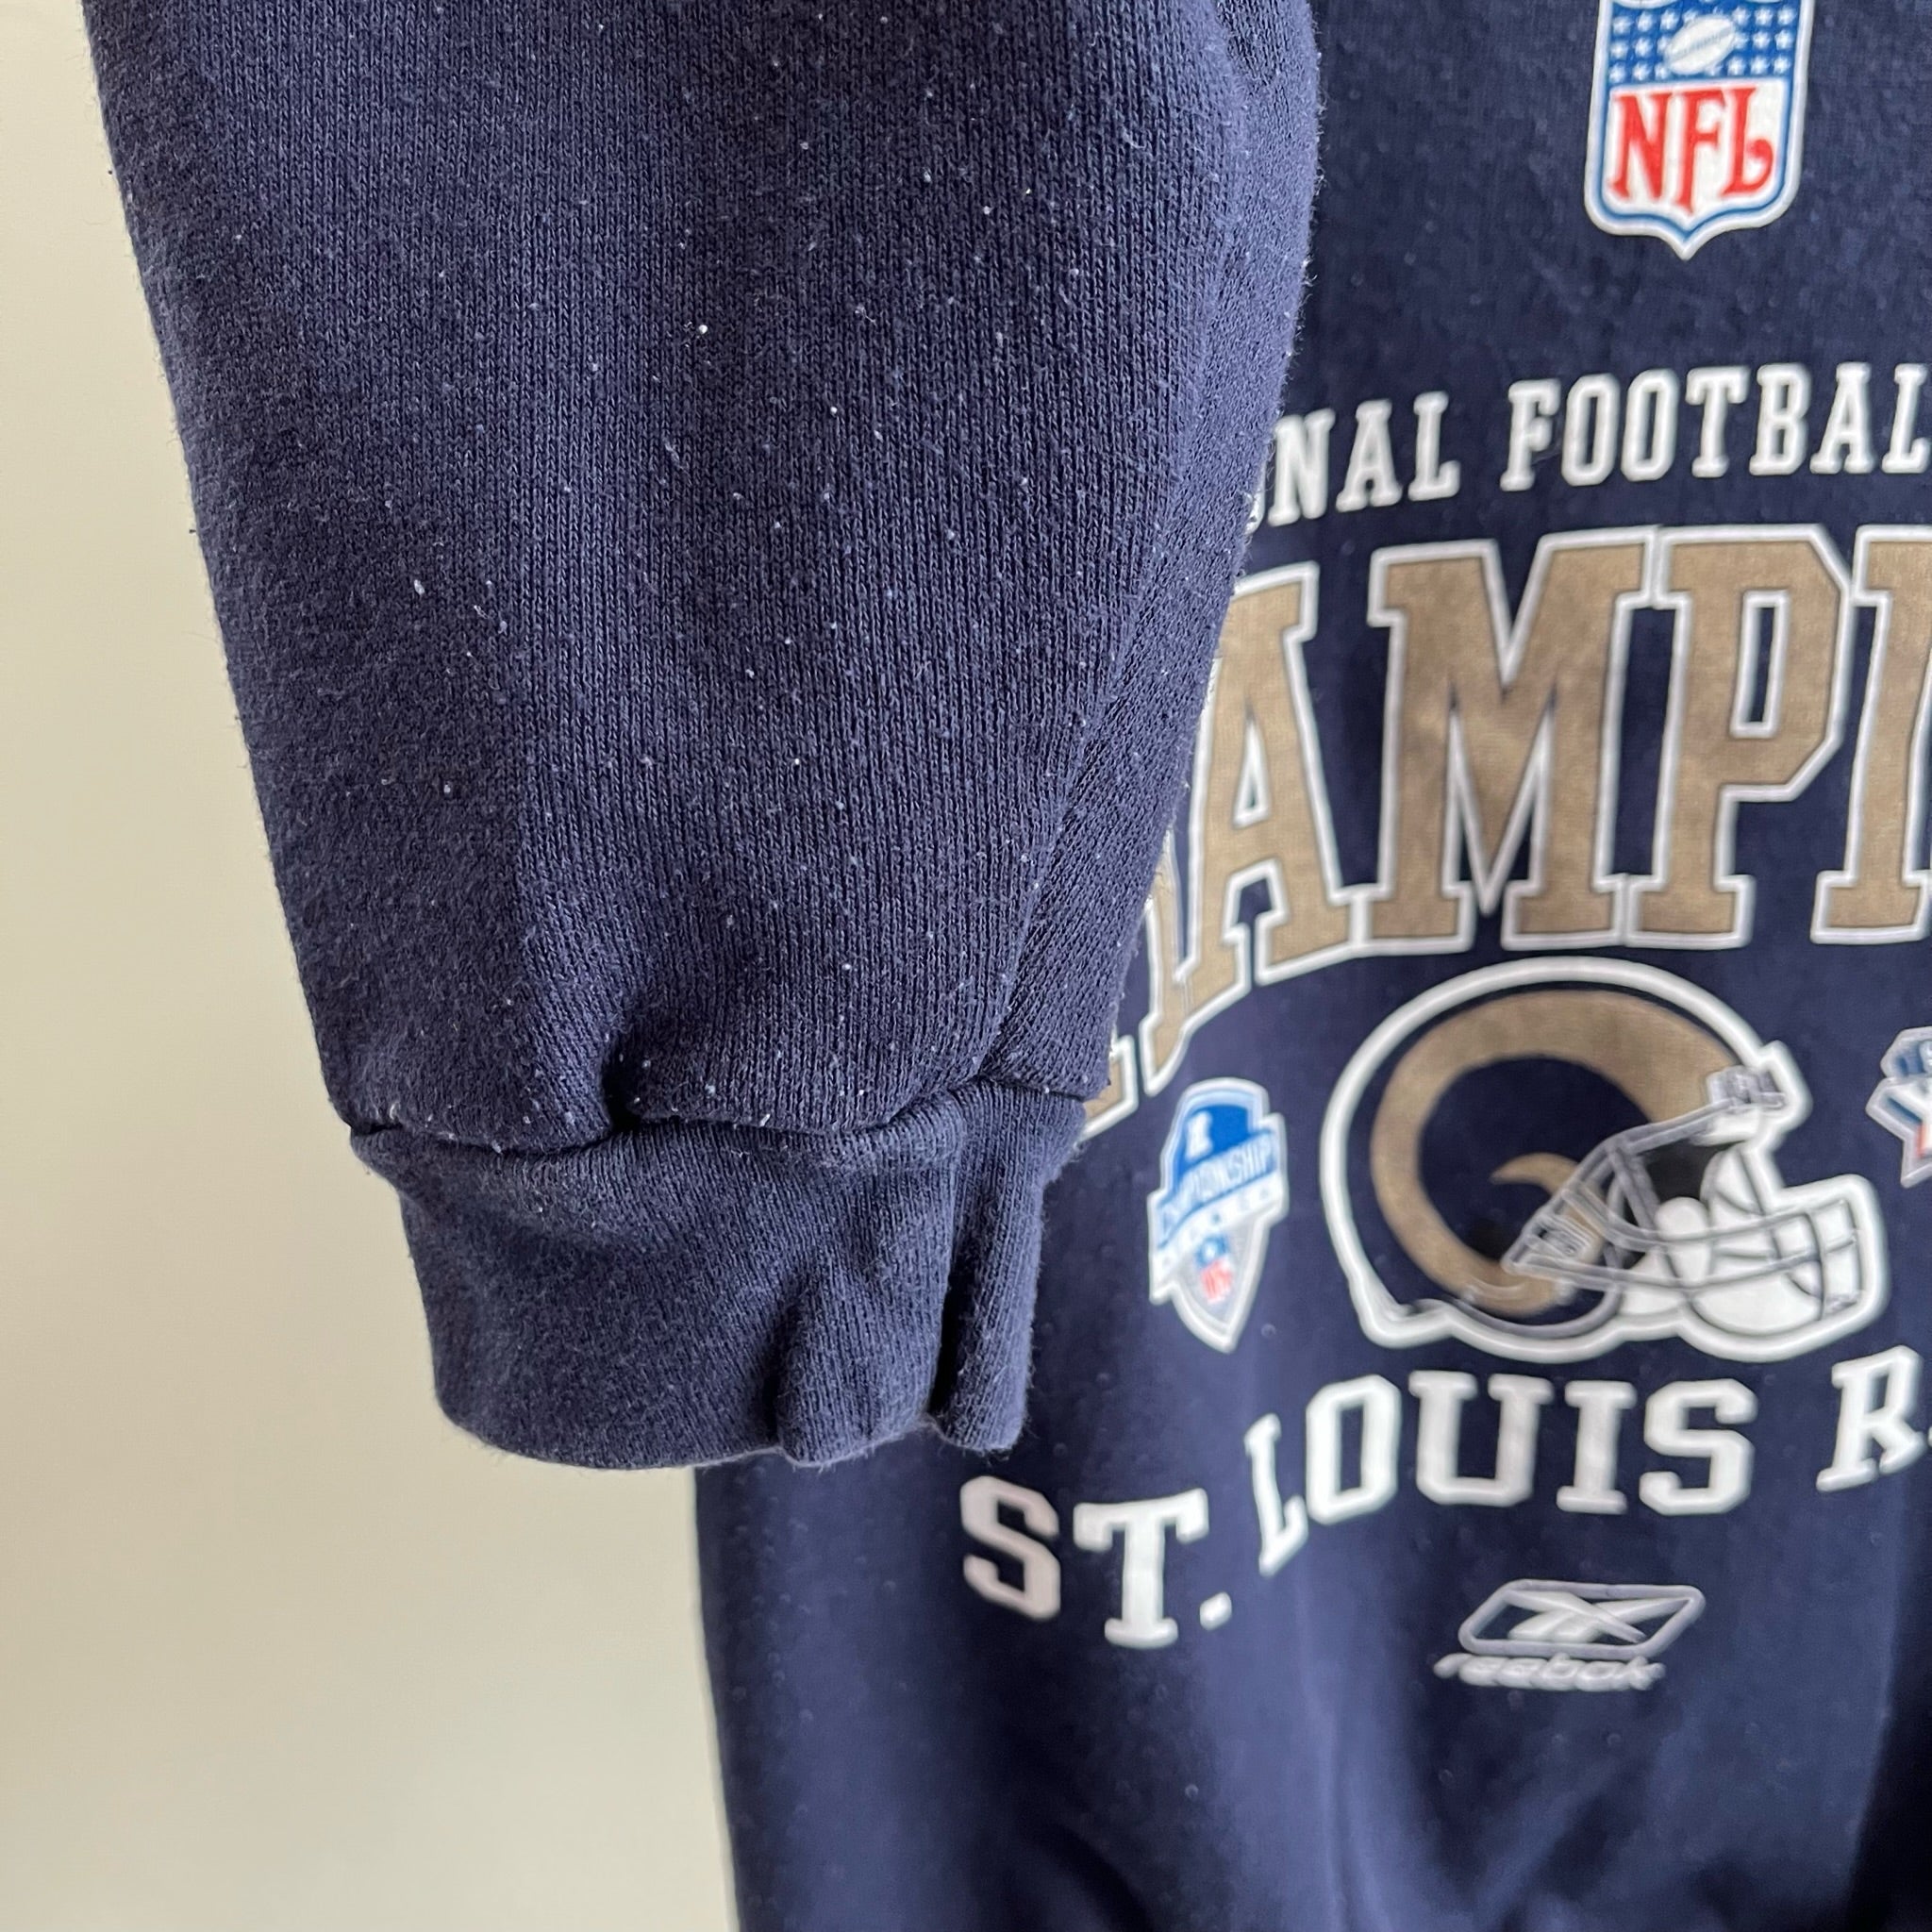 2001 NFC Champs - St. Louis Rams (Now Los Angeles Rams BTW) - Sweatshirt